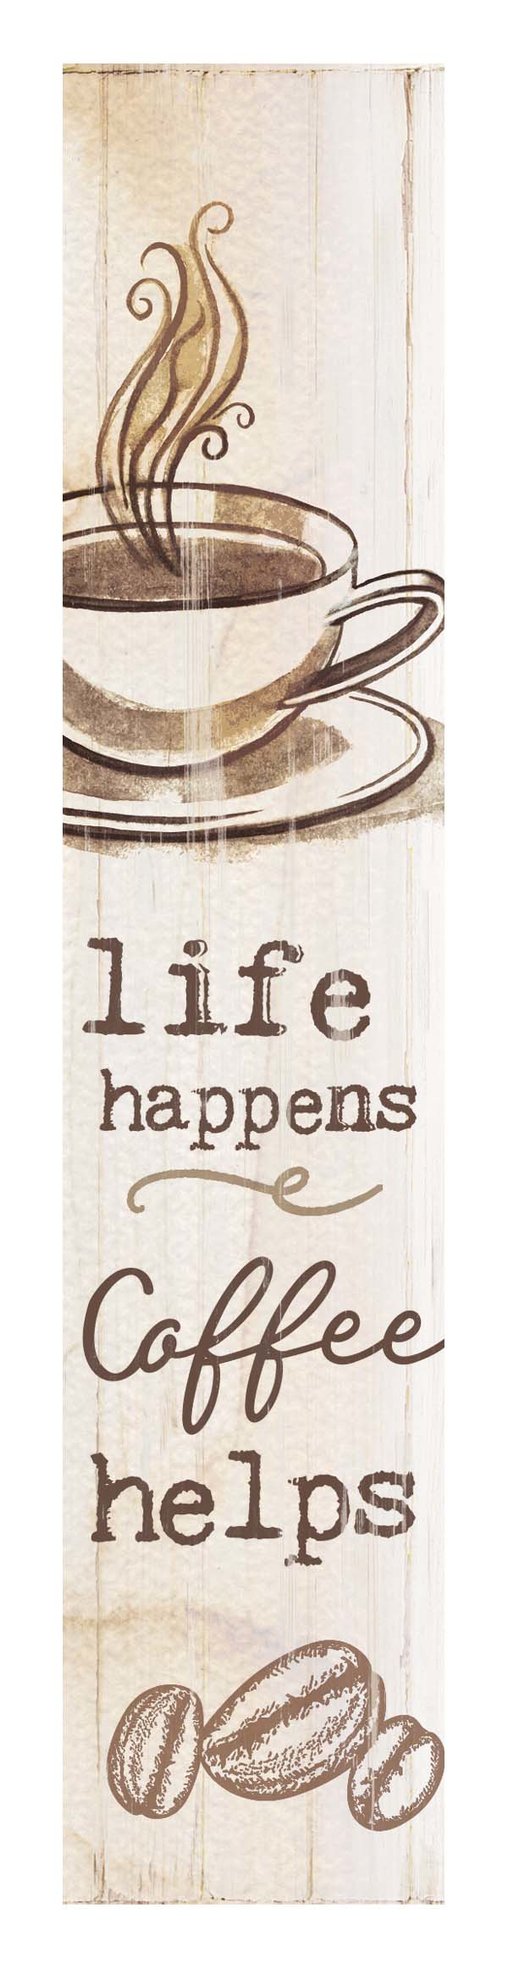 Life happens Coffee helps